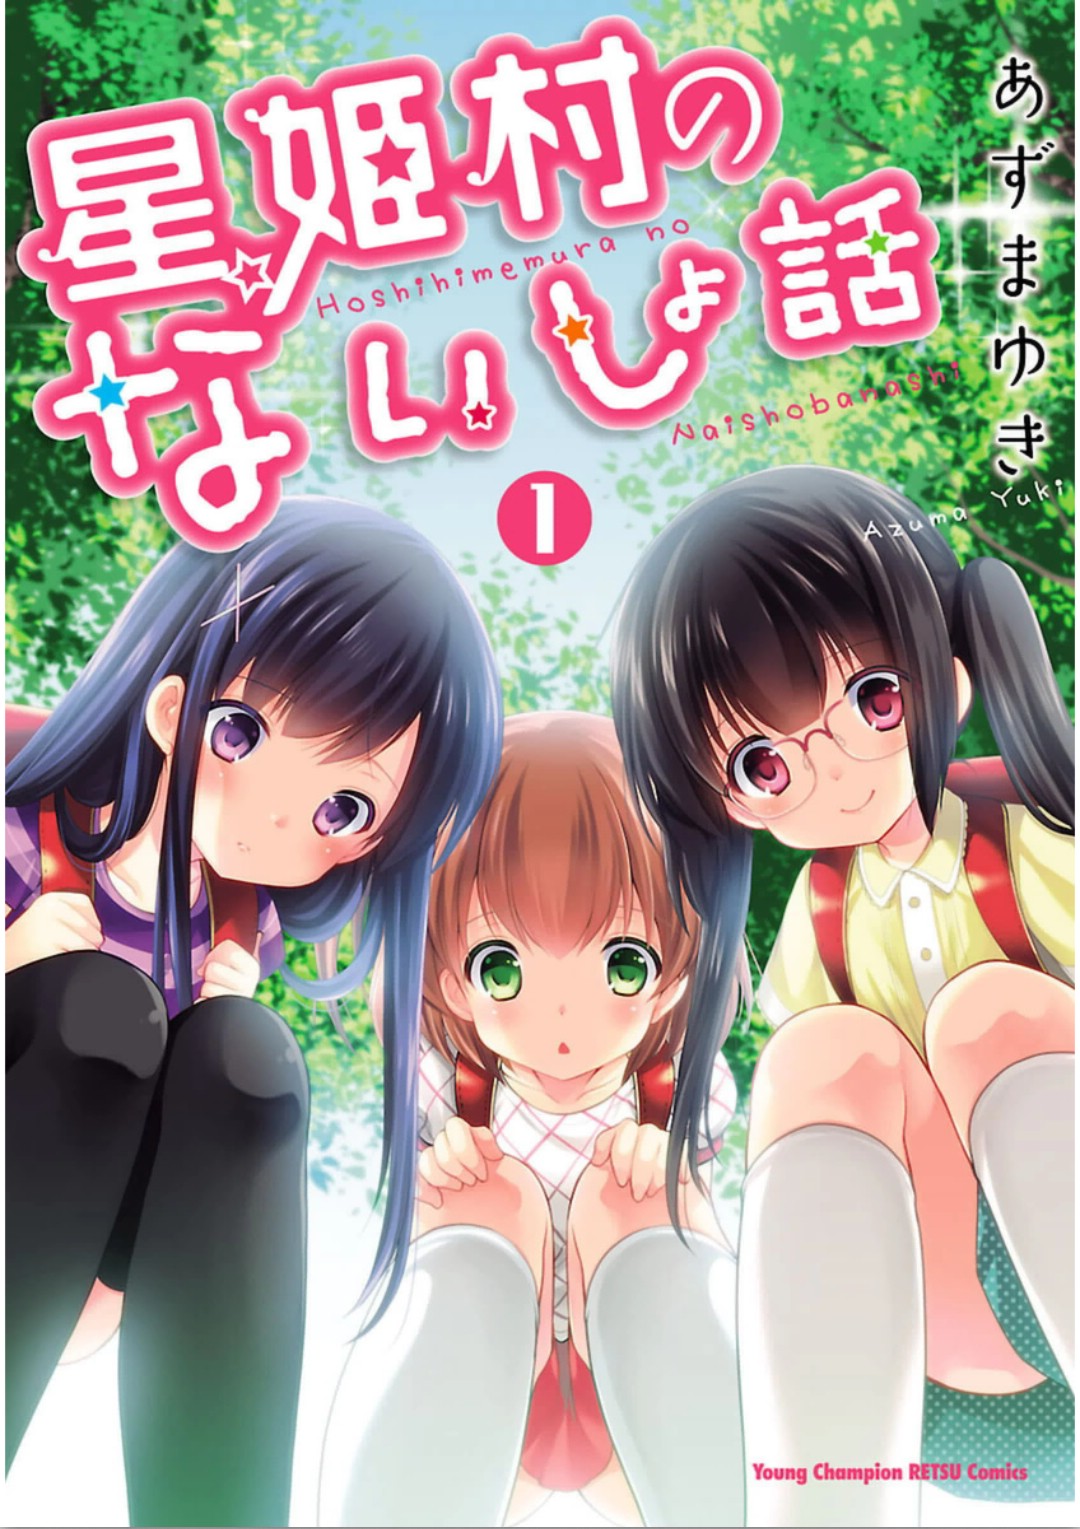 Hoshihimemura no Naishobanashi Vol. 1 Ch. 1 Little girls are too troublesome